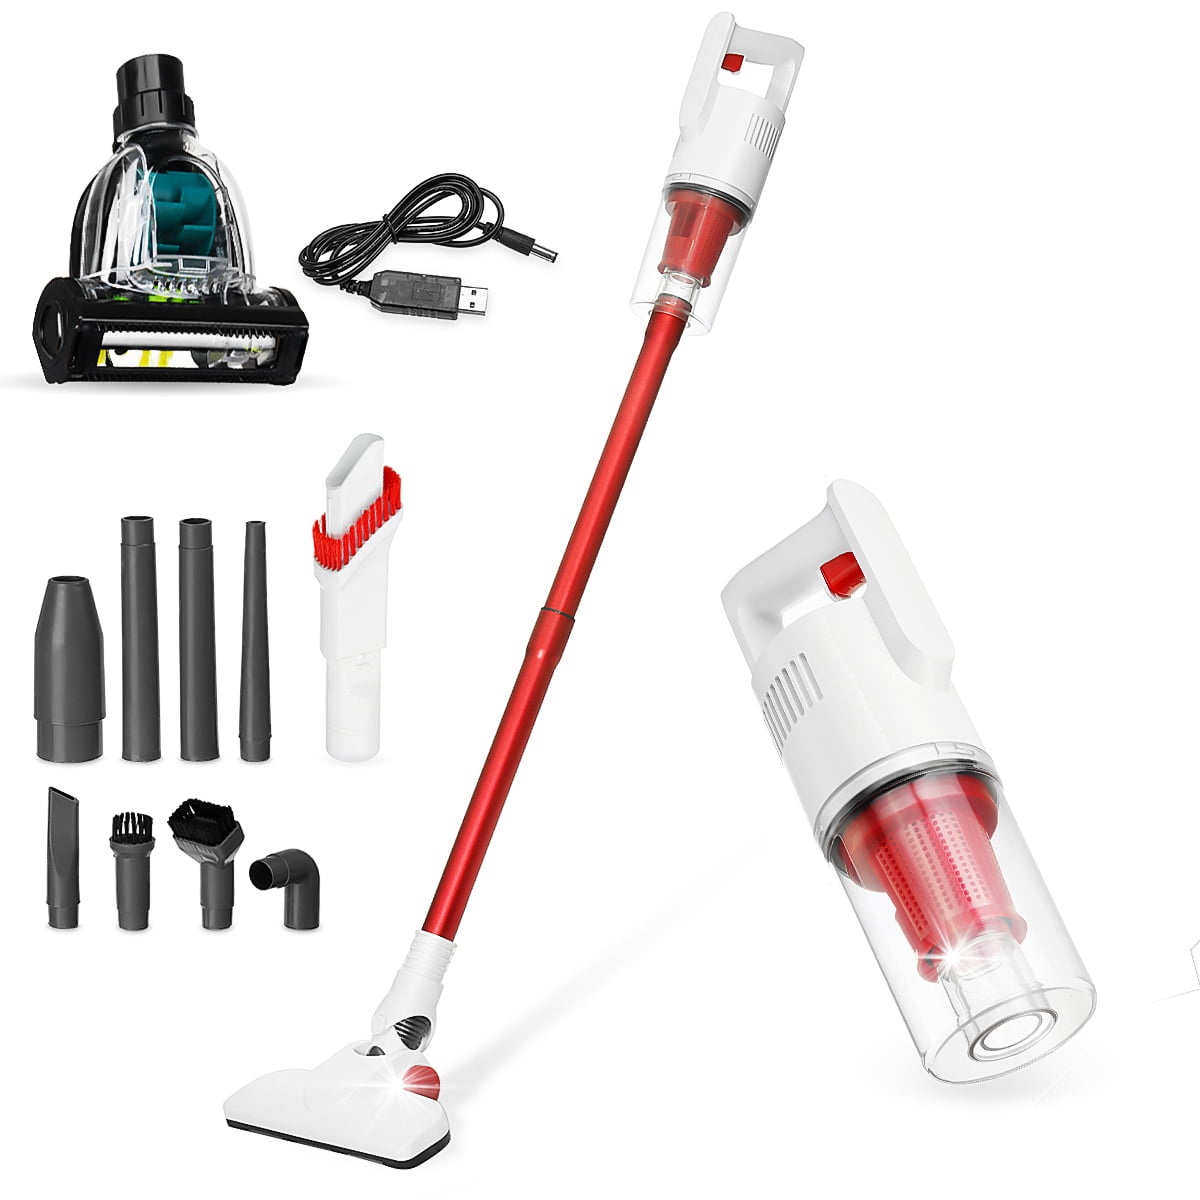 Smorebuy Cordless Vacuum Cleaner, 120W Power Strong Suction LED Powered Brushes Cordless Stick